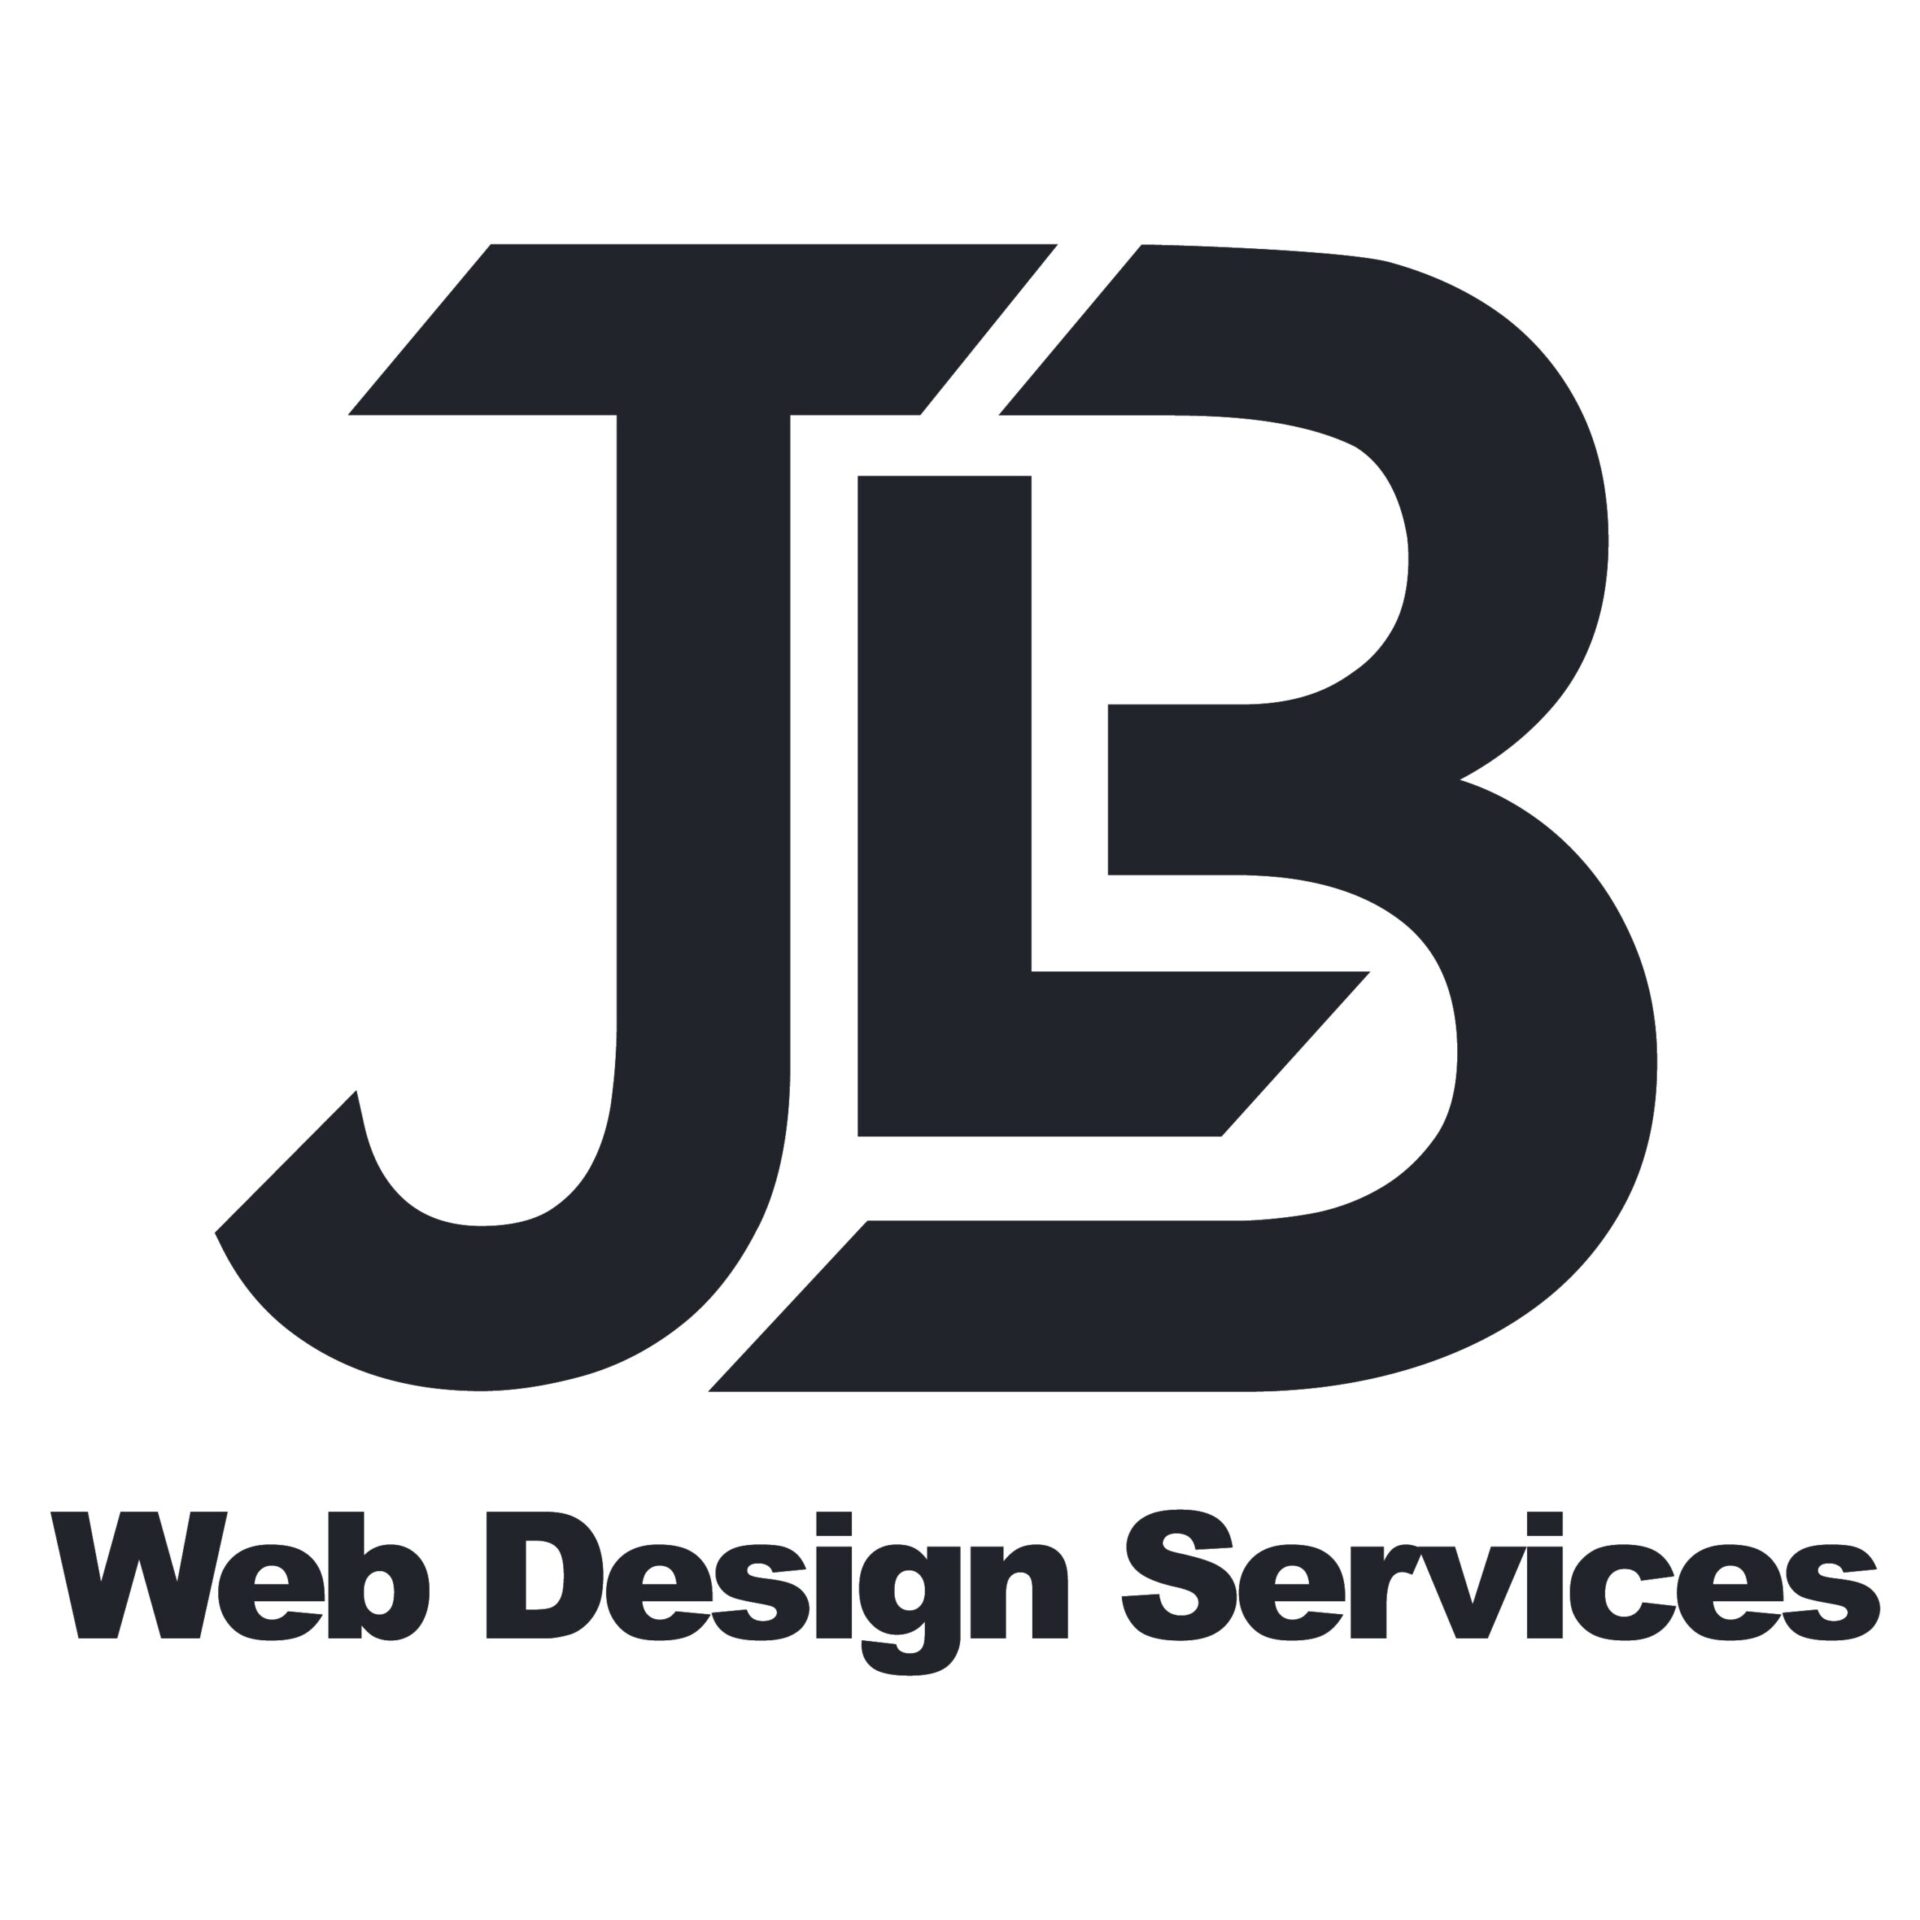 JLB Web Design Services LOGO DARK-01-01